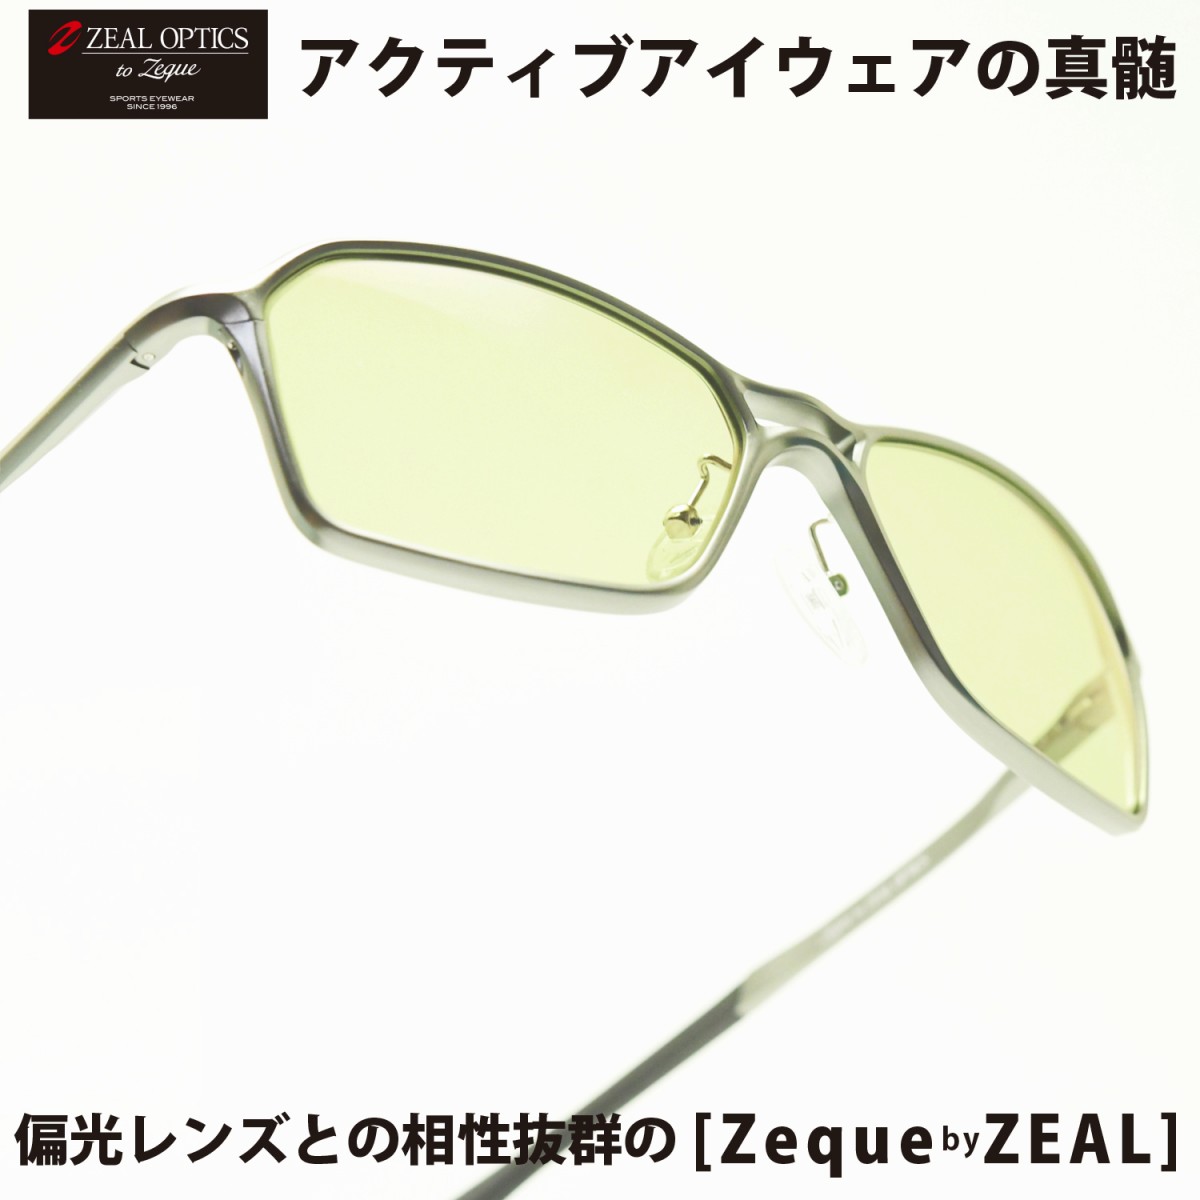 Zeal Optics社 VEGA(偏光) セージメタル イーズグリーン F1827